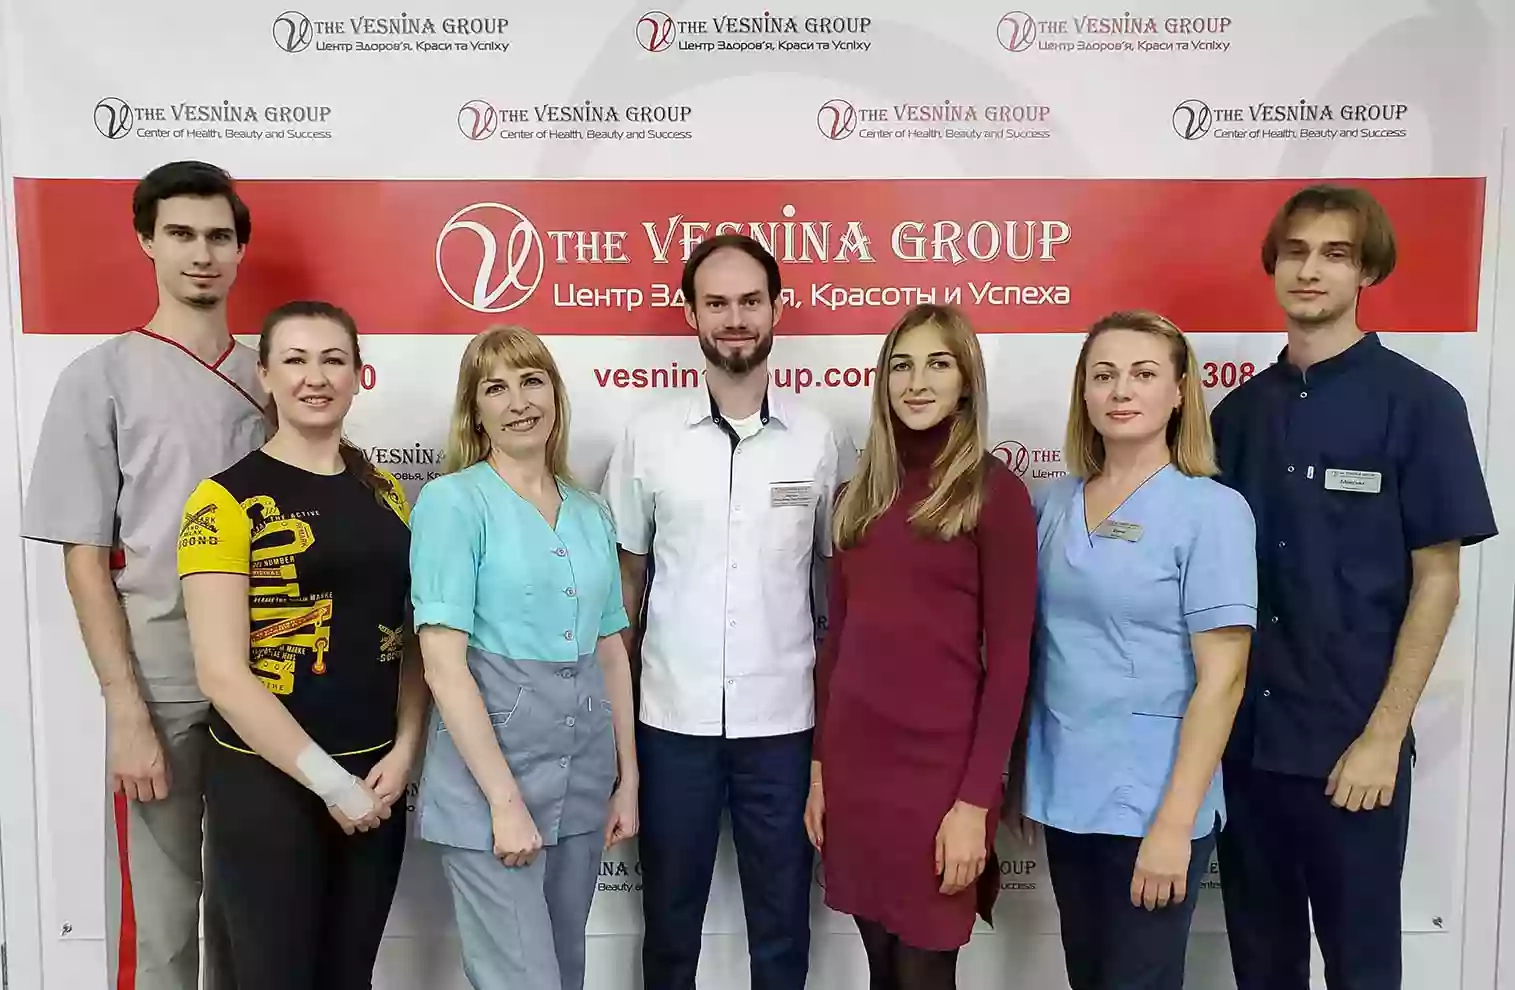 The Vesnina Group